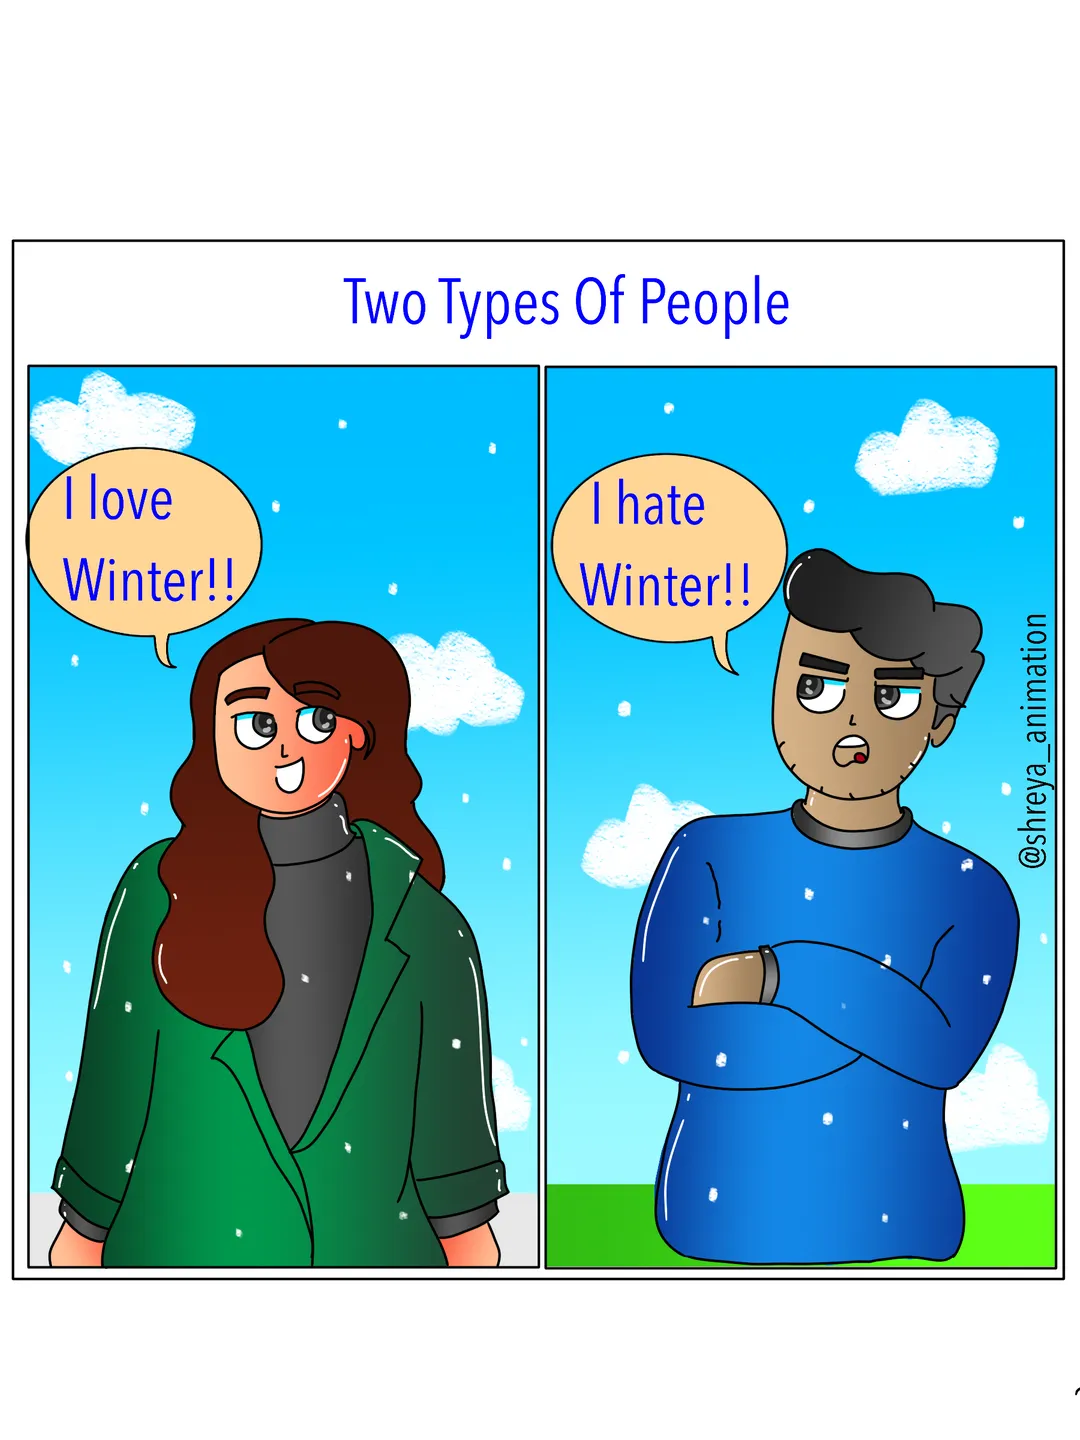 People in Winter